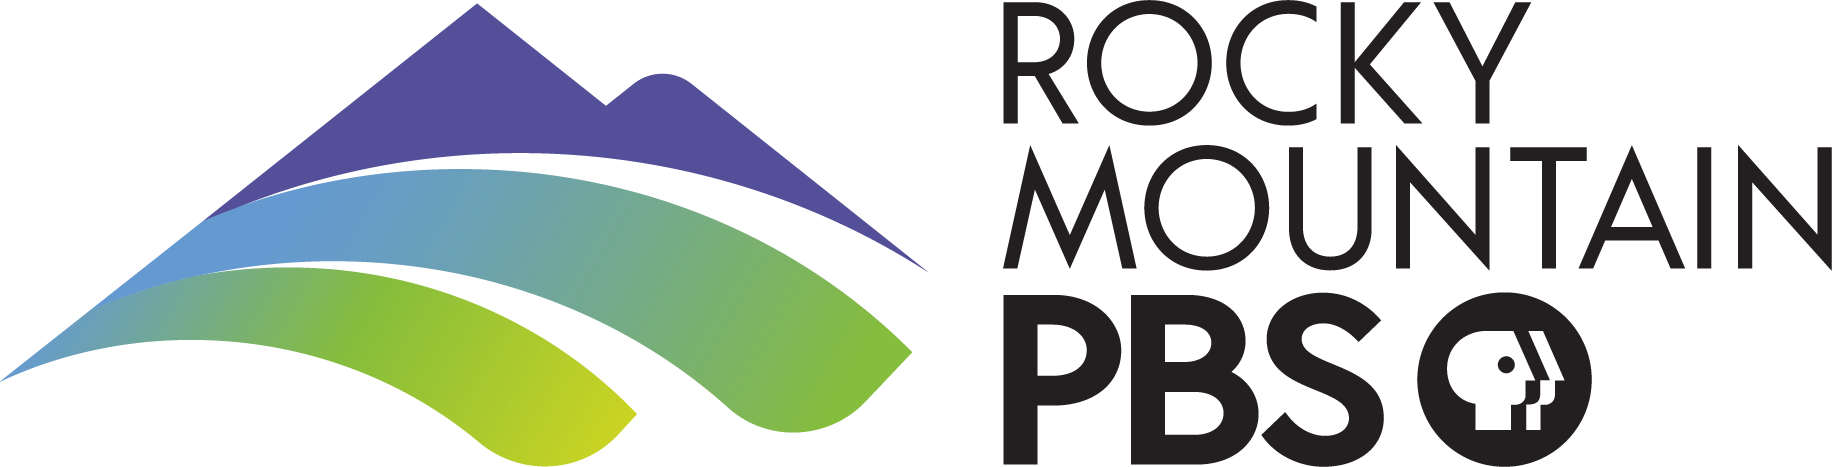 Secondary Wordmark Logo - Rocky Mountain Public Media (1832x467)